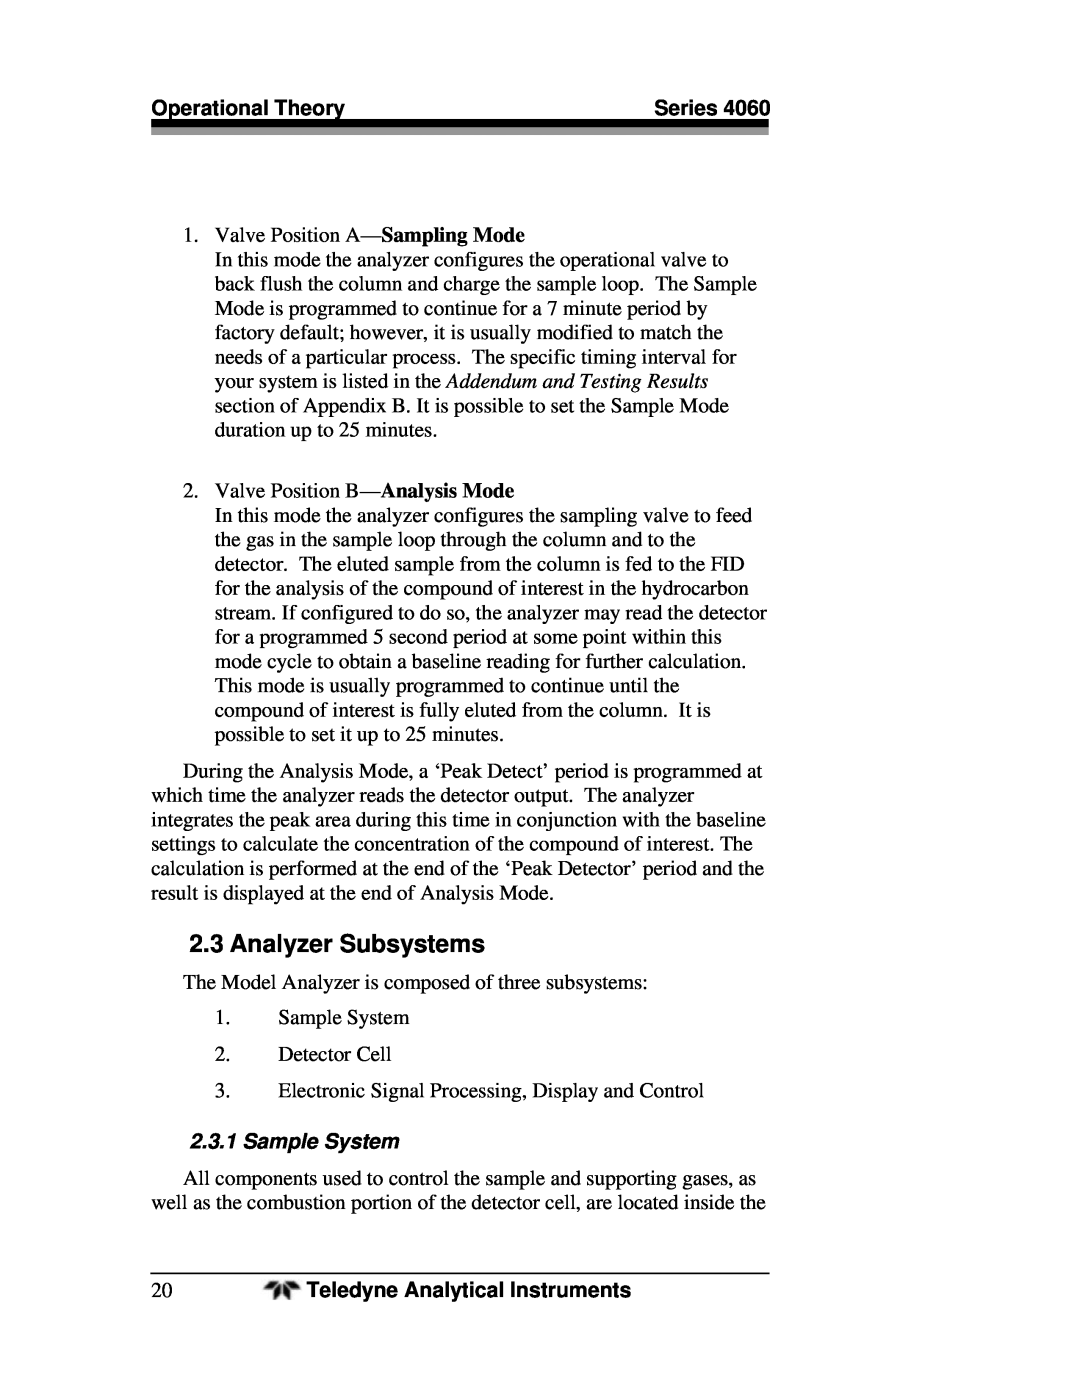 Teledyne 4060 manual Analyzer Subsystems, Sample System 